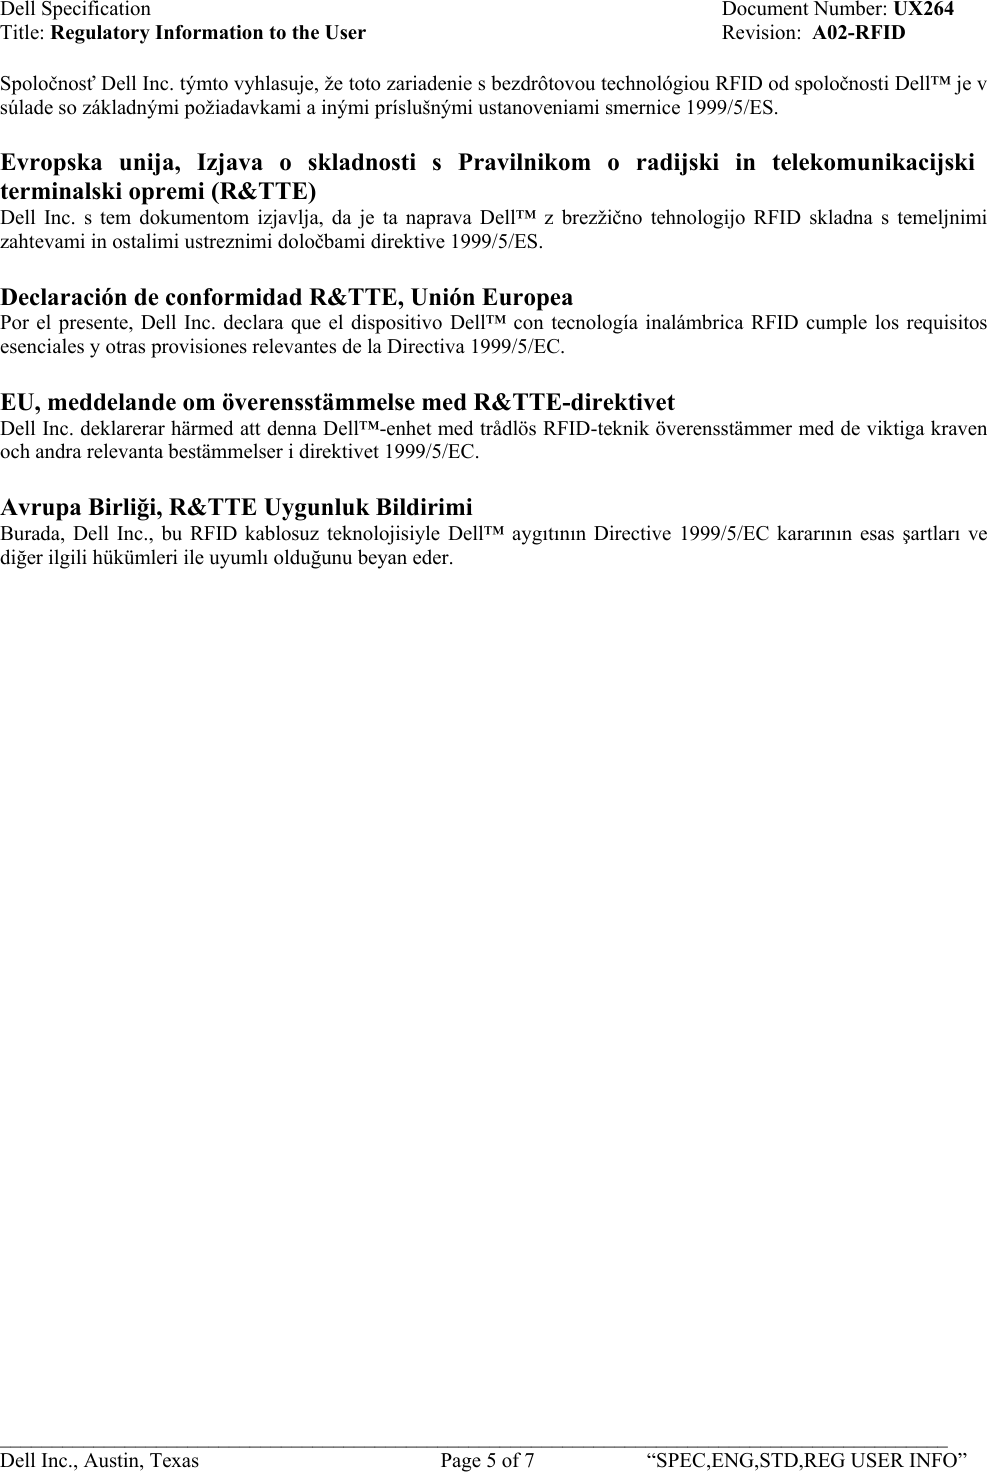 Dell Specification    Document Number: UX264 Title: Regulatory Information to the User    Revision:  A02-RFID  Spoločnosť Dell Inc. týmto vyhlasuje, že toto zariadenie s bezdrôtovou technológiou RFID od spoločnosti Dell™ je v súlade so základnými požiadavkami a inými príslušnými ustanoveniami smernice 1999/5/ES.  Evropska unija, Izjava o skladnosti s Pravilnikom o radijski in telekomunikacijski terminalski opremi (R&amp;TTE) Dell Inc. s tem dokumentom izjavlja, da je ta naprava Dell™ z brezžično tehnologijo RFID skladna s temeljnimi zahtevami in ostalimi ustreznimi določbami direktive 1999/5/ES.  Declaración de conformidad R&amp;TTE, Unión Europea  Por el presente, Dell Inc. declara que el dispositivo Dell™ con tecnología inalámbrica RFID cumple los requisitos esenciales y otras provisiones relevantes de la Directiva 1999/5/EC.  EU, meddelande om överensstämmelse med R&amp;TTE-direktivet   Dell Inc. deklarerar härmed att denna Dell™-enhet med trådlös RFID-teknik överensstämmer med de viktiga kraven och andra relevanta bestämmelser i direktivet 1999/5/EC.  Avrupa Birliği, R&amp;TTE Uygunluk Bildirimi  Burada, Dell Inc., bu RFID kablosuz teknolojisiyle Dell™ aygıtının Directive 1999/5/EC kararının esas şartları ve diğer ilgili hükümleri ile uyumlı olduğunu beyan eder.   ___________________________________________________________________________________________ Dell Inc., Austin, Texas    Page 5 of 7  “SPEC,ENG,STD,REG USER INFO”  